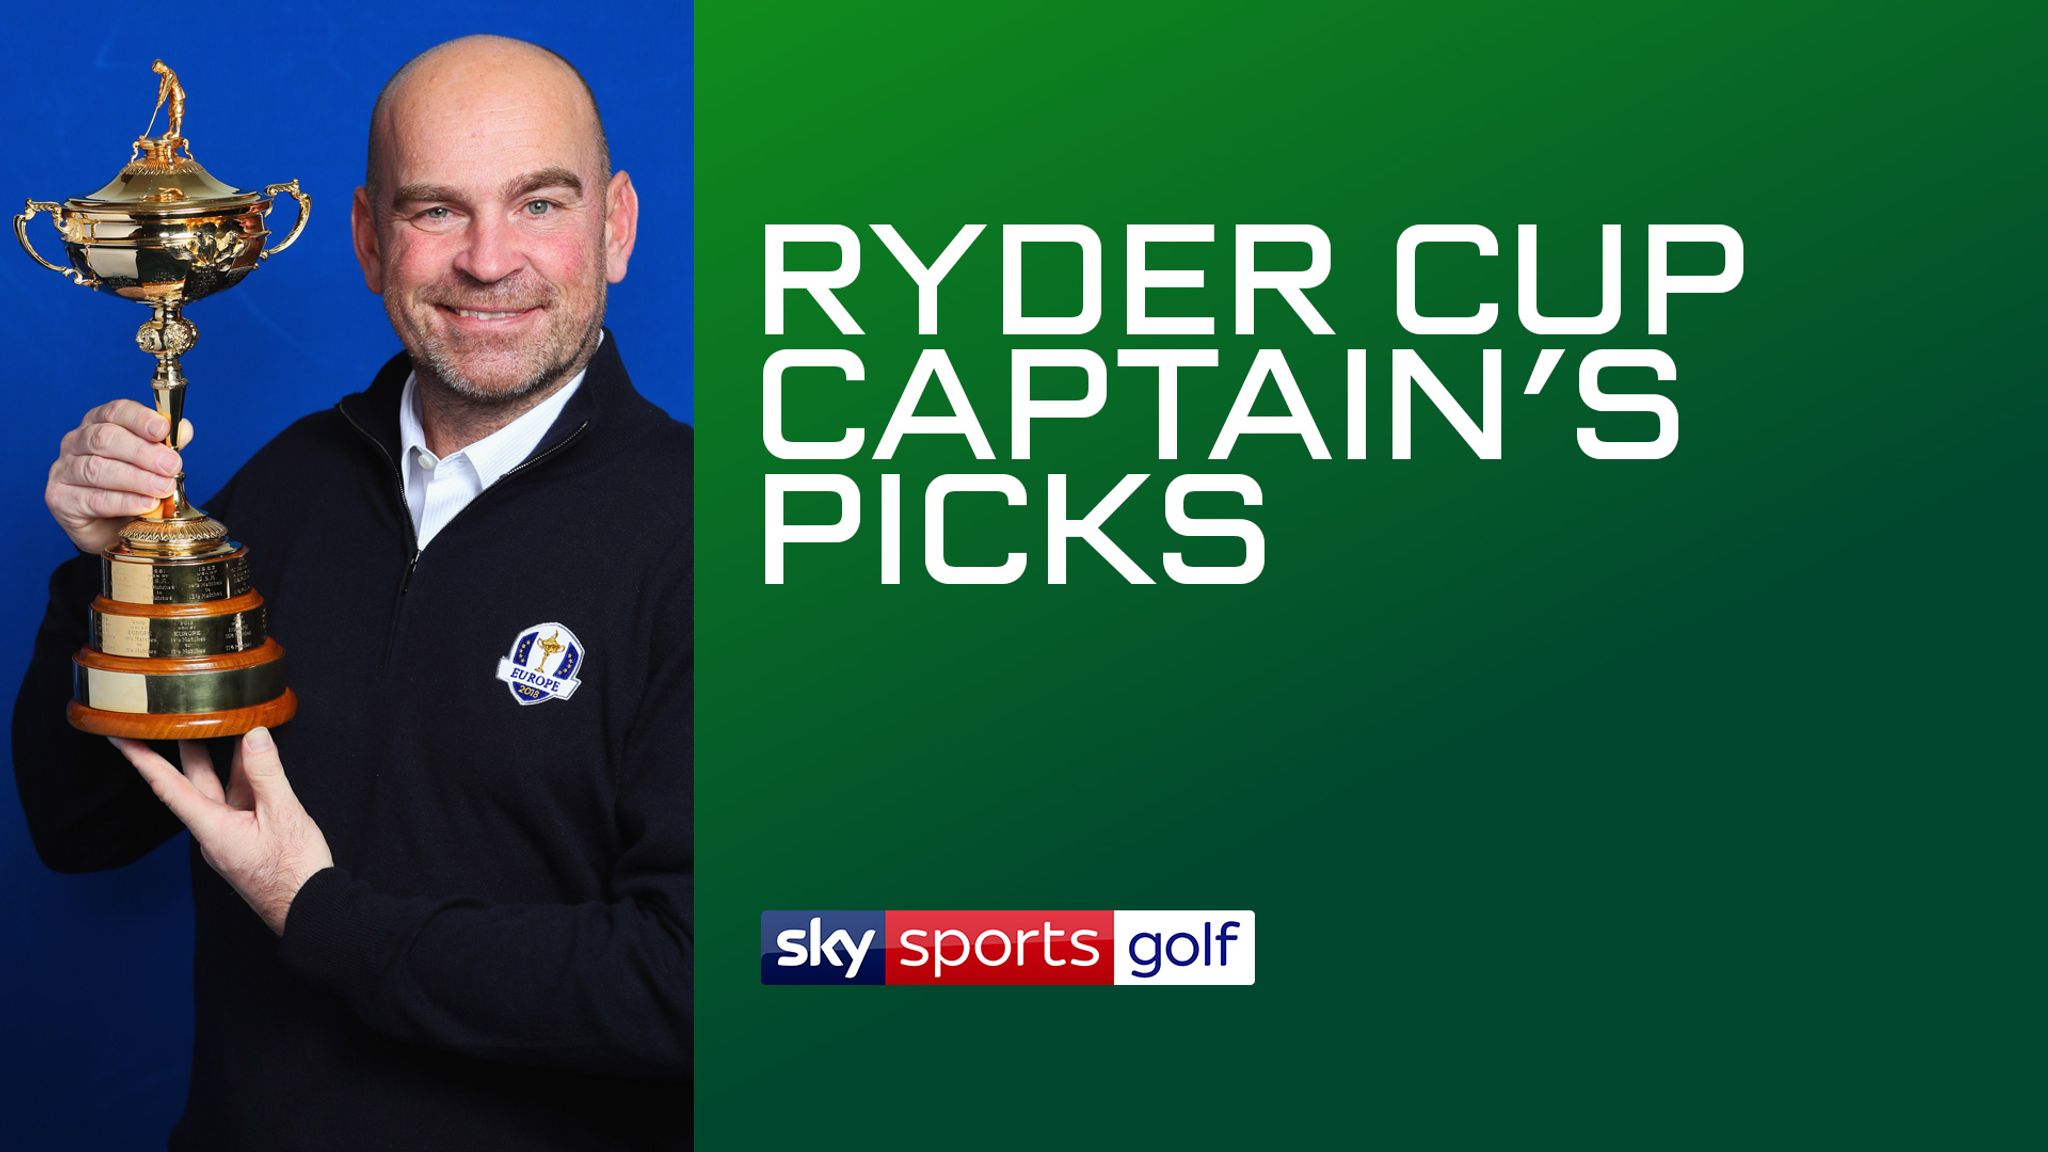 Ryder Cup Watch Thomas Bjorn name captains picks live on Sky Sports stream Golf News Sky Sports